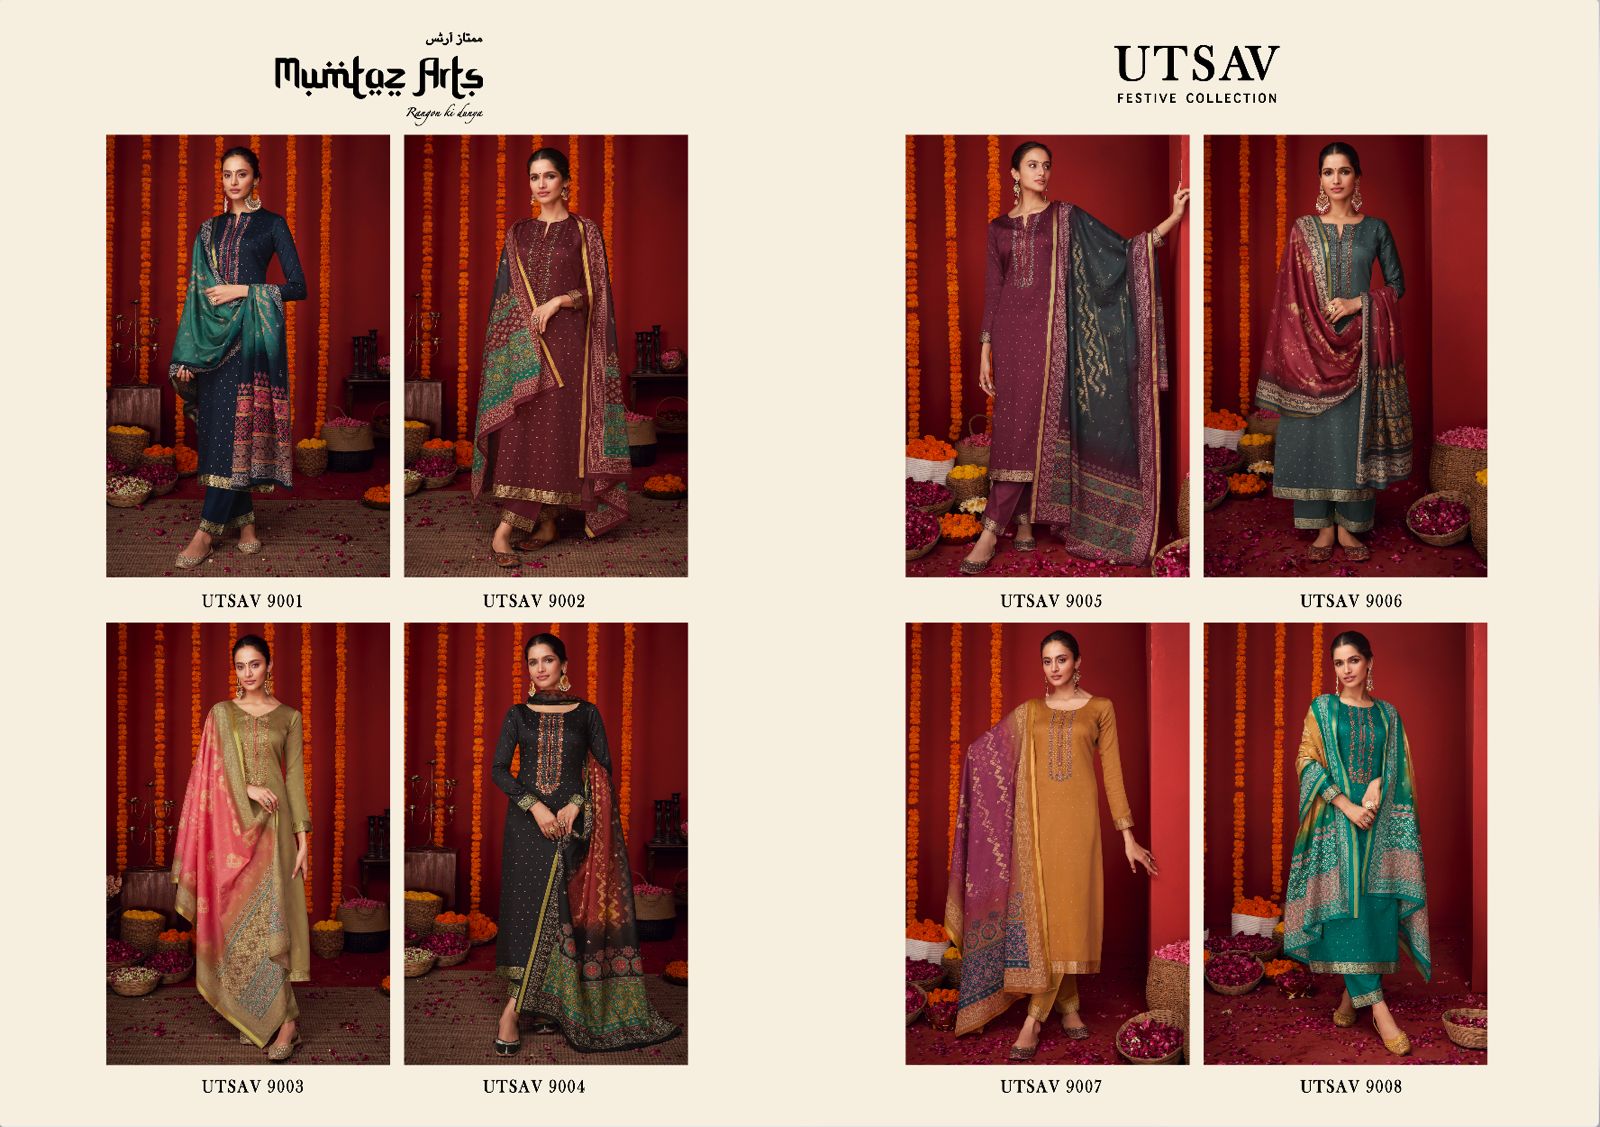 Mumtaz Utsav collection 11